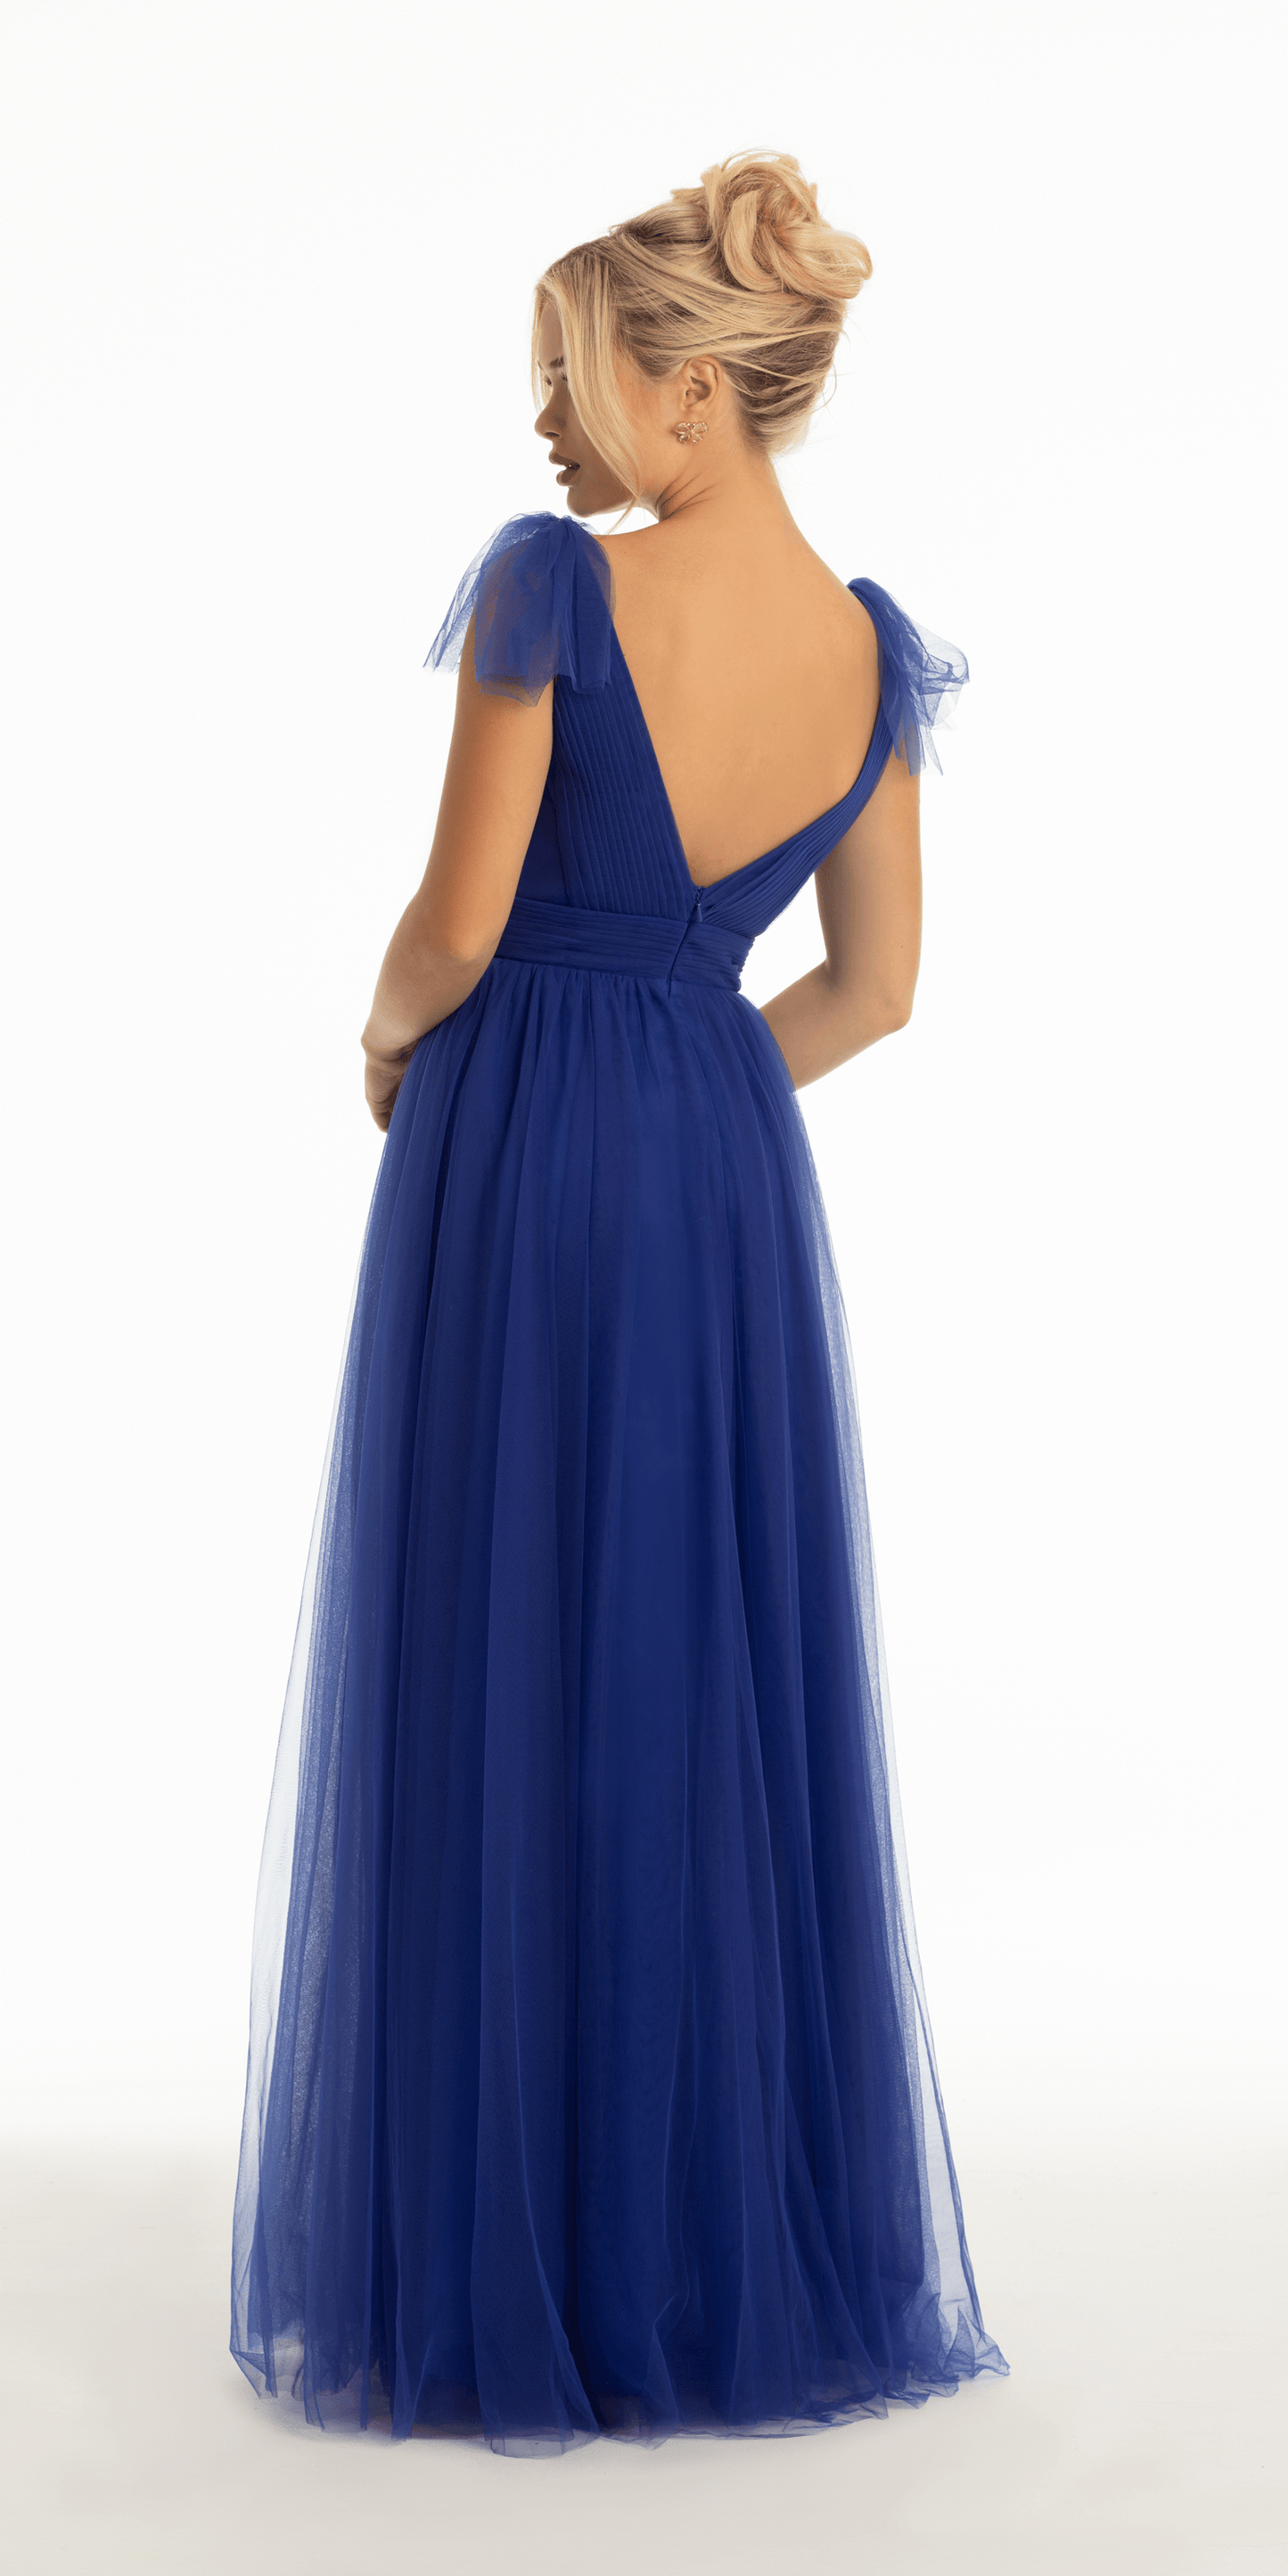 Camille La Vie Tie Shoulder Illusion Plunge Ballgown missy / 2 / royal-blue